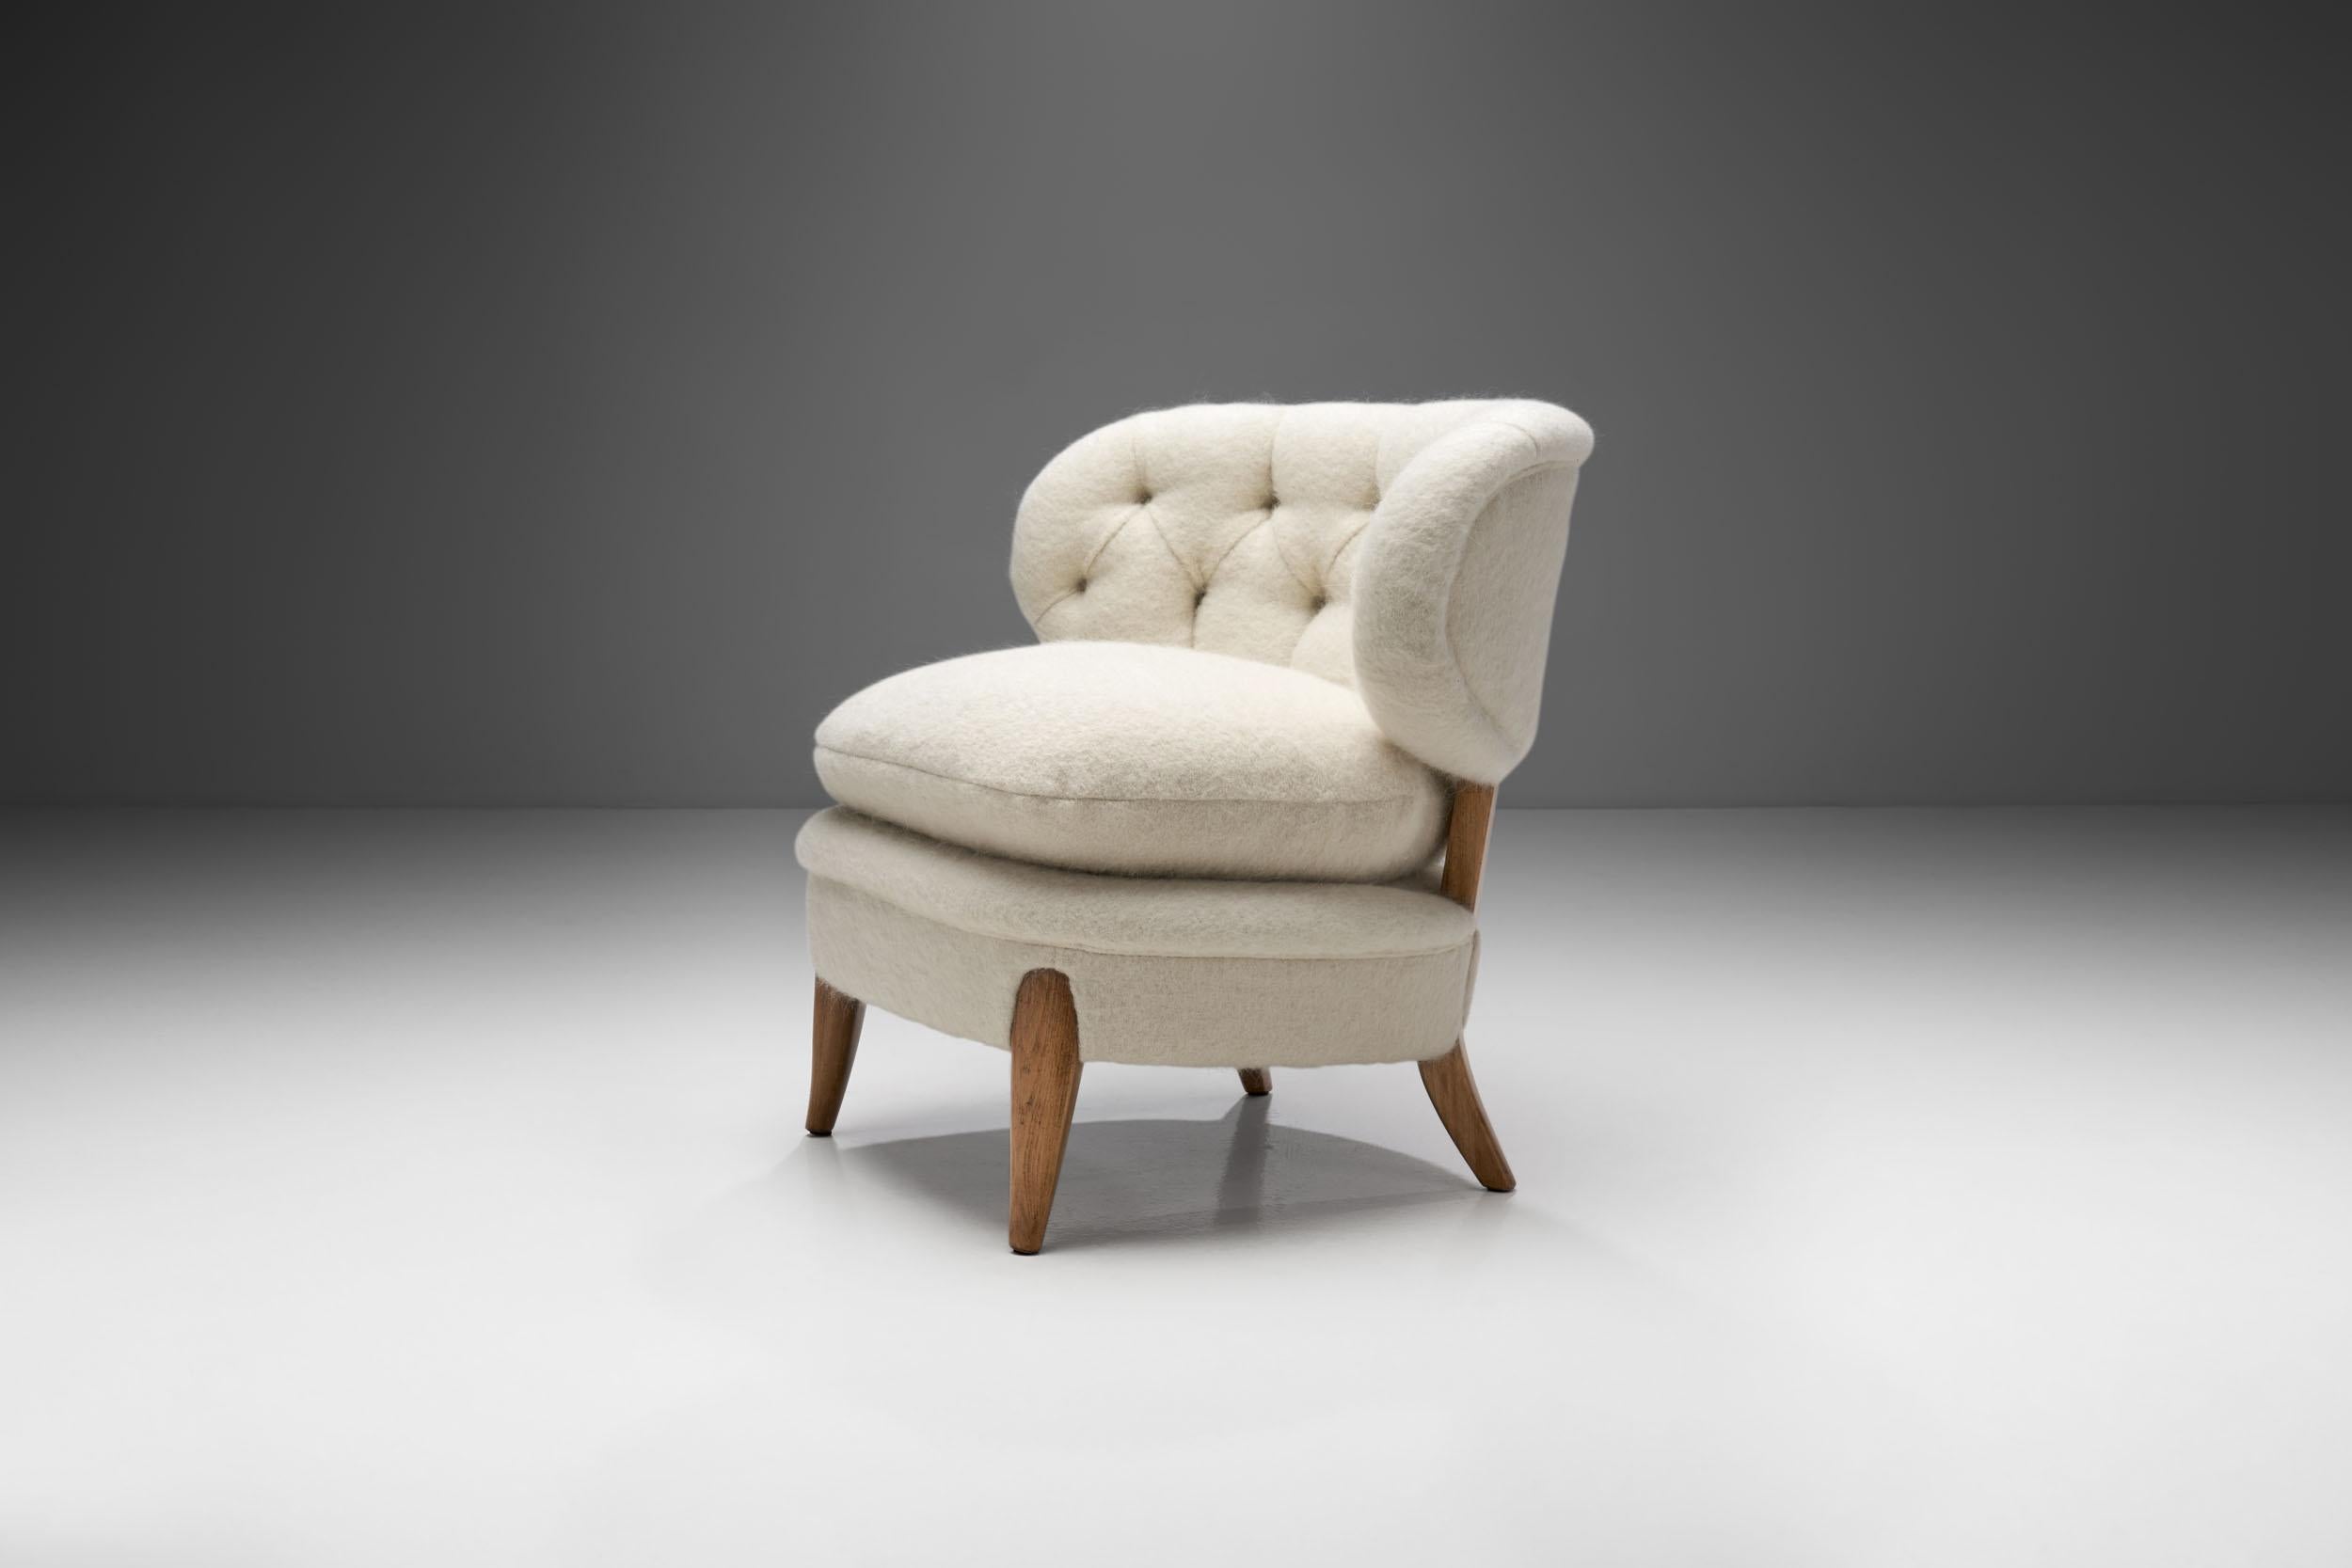 Swedish “Schulz” Lounge Chair by Otto Schulz for Jio Möbler Jönköping, Sweden 1940s